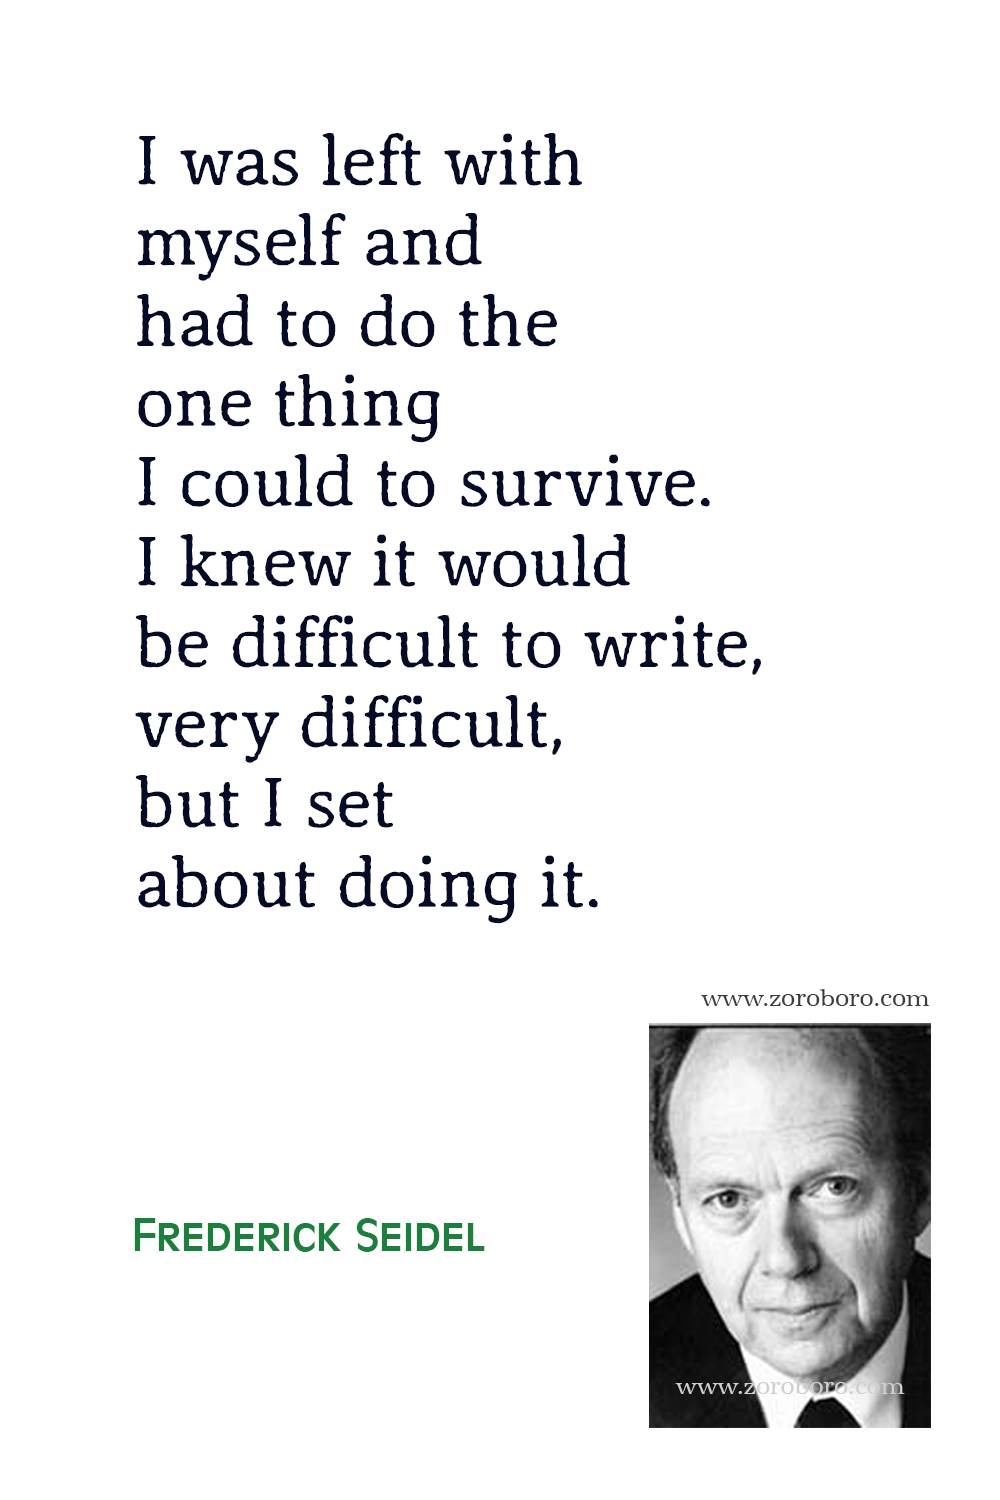 Frederick Seidel Quotes, Frederick Seidel Poems, Frederick Seidel Poetry, Frederick Seidel Books, Frederick Seidel